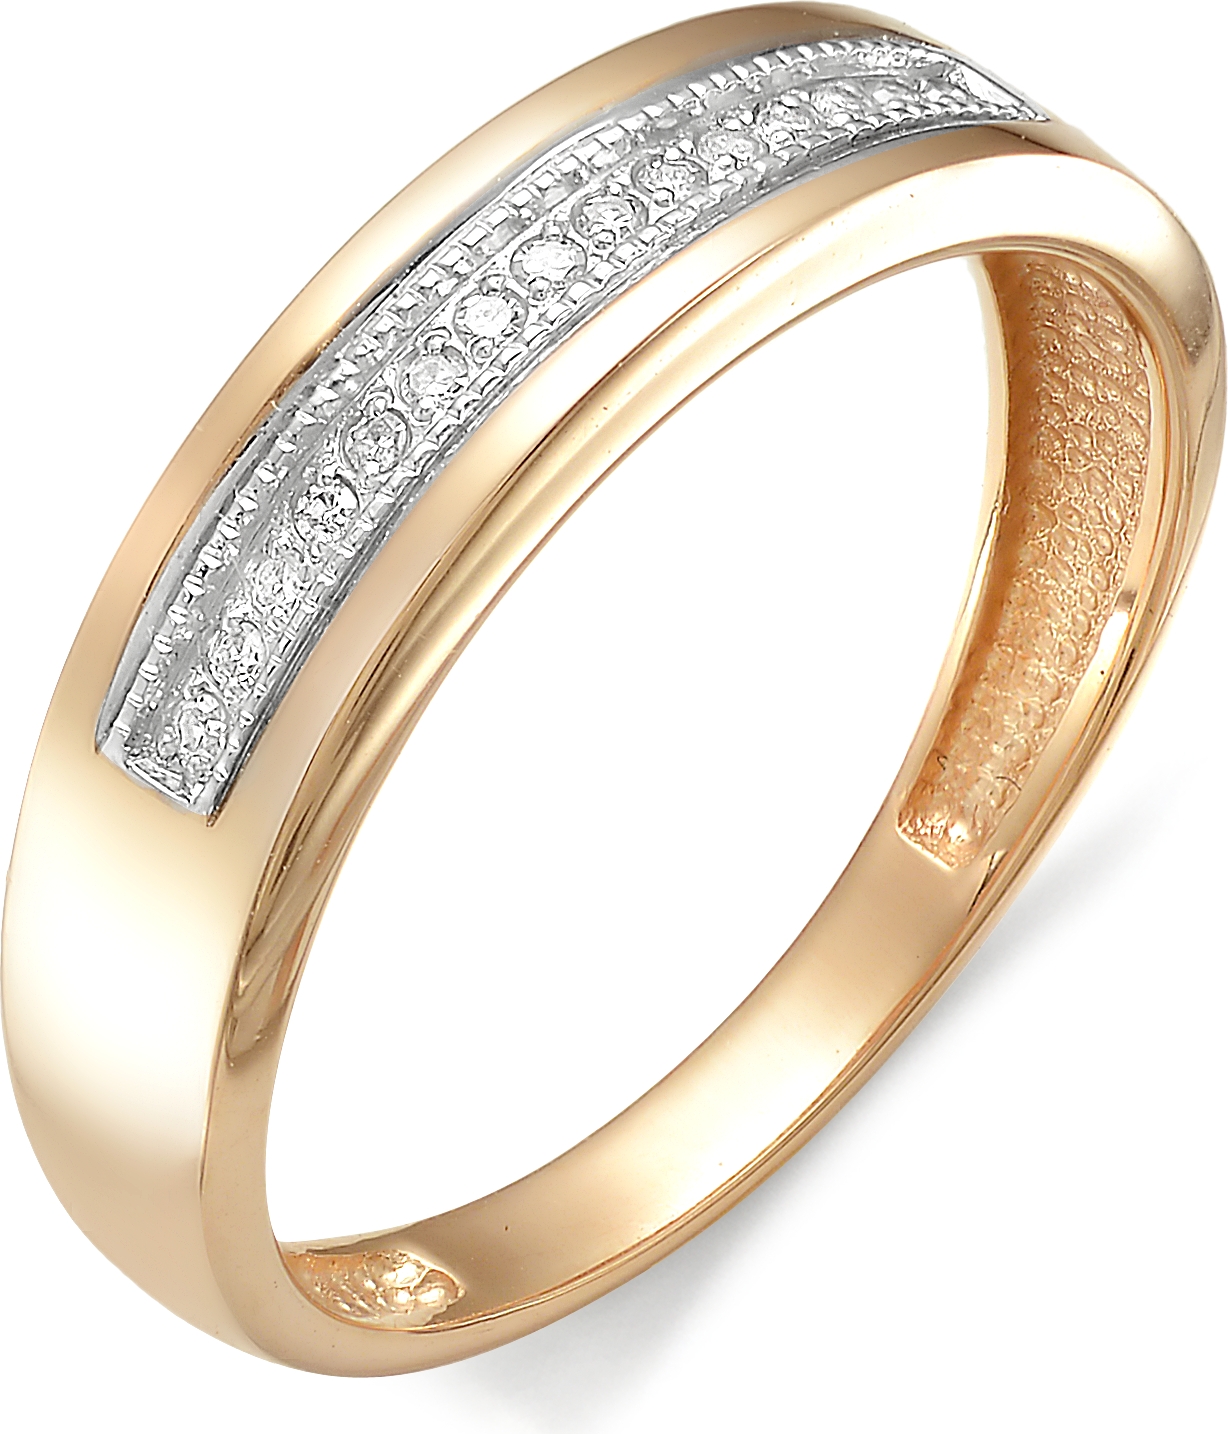 Кольцо с бриллиантами из красного золота (арт. 813972)